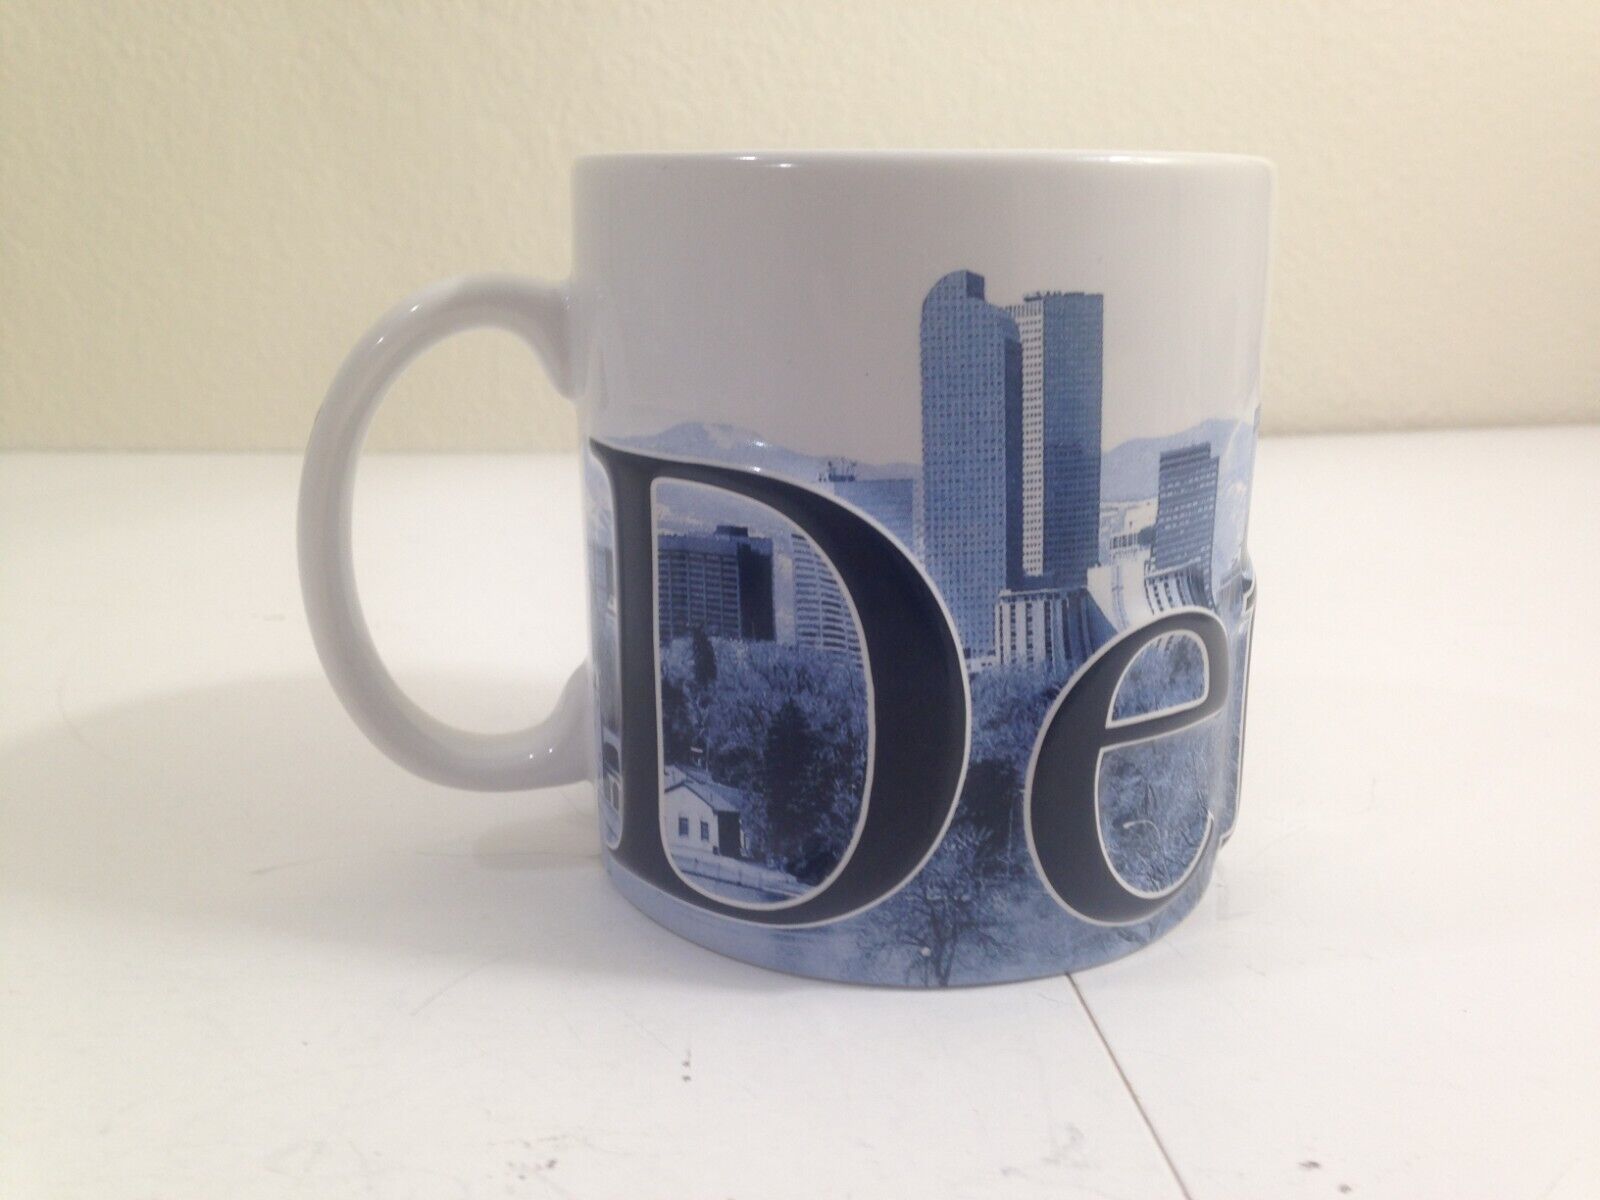 Denver Coffee mug cup Americaware 3D embossed raised letters skyline